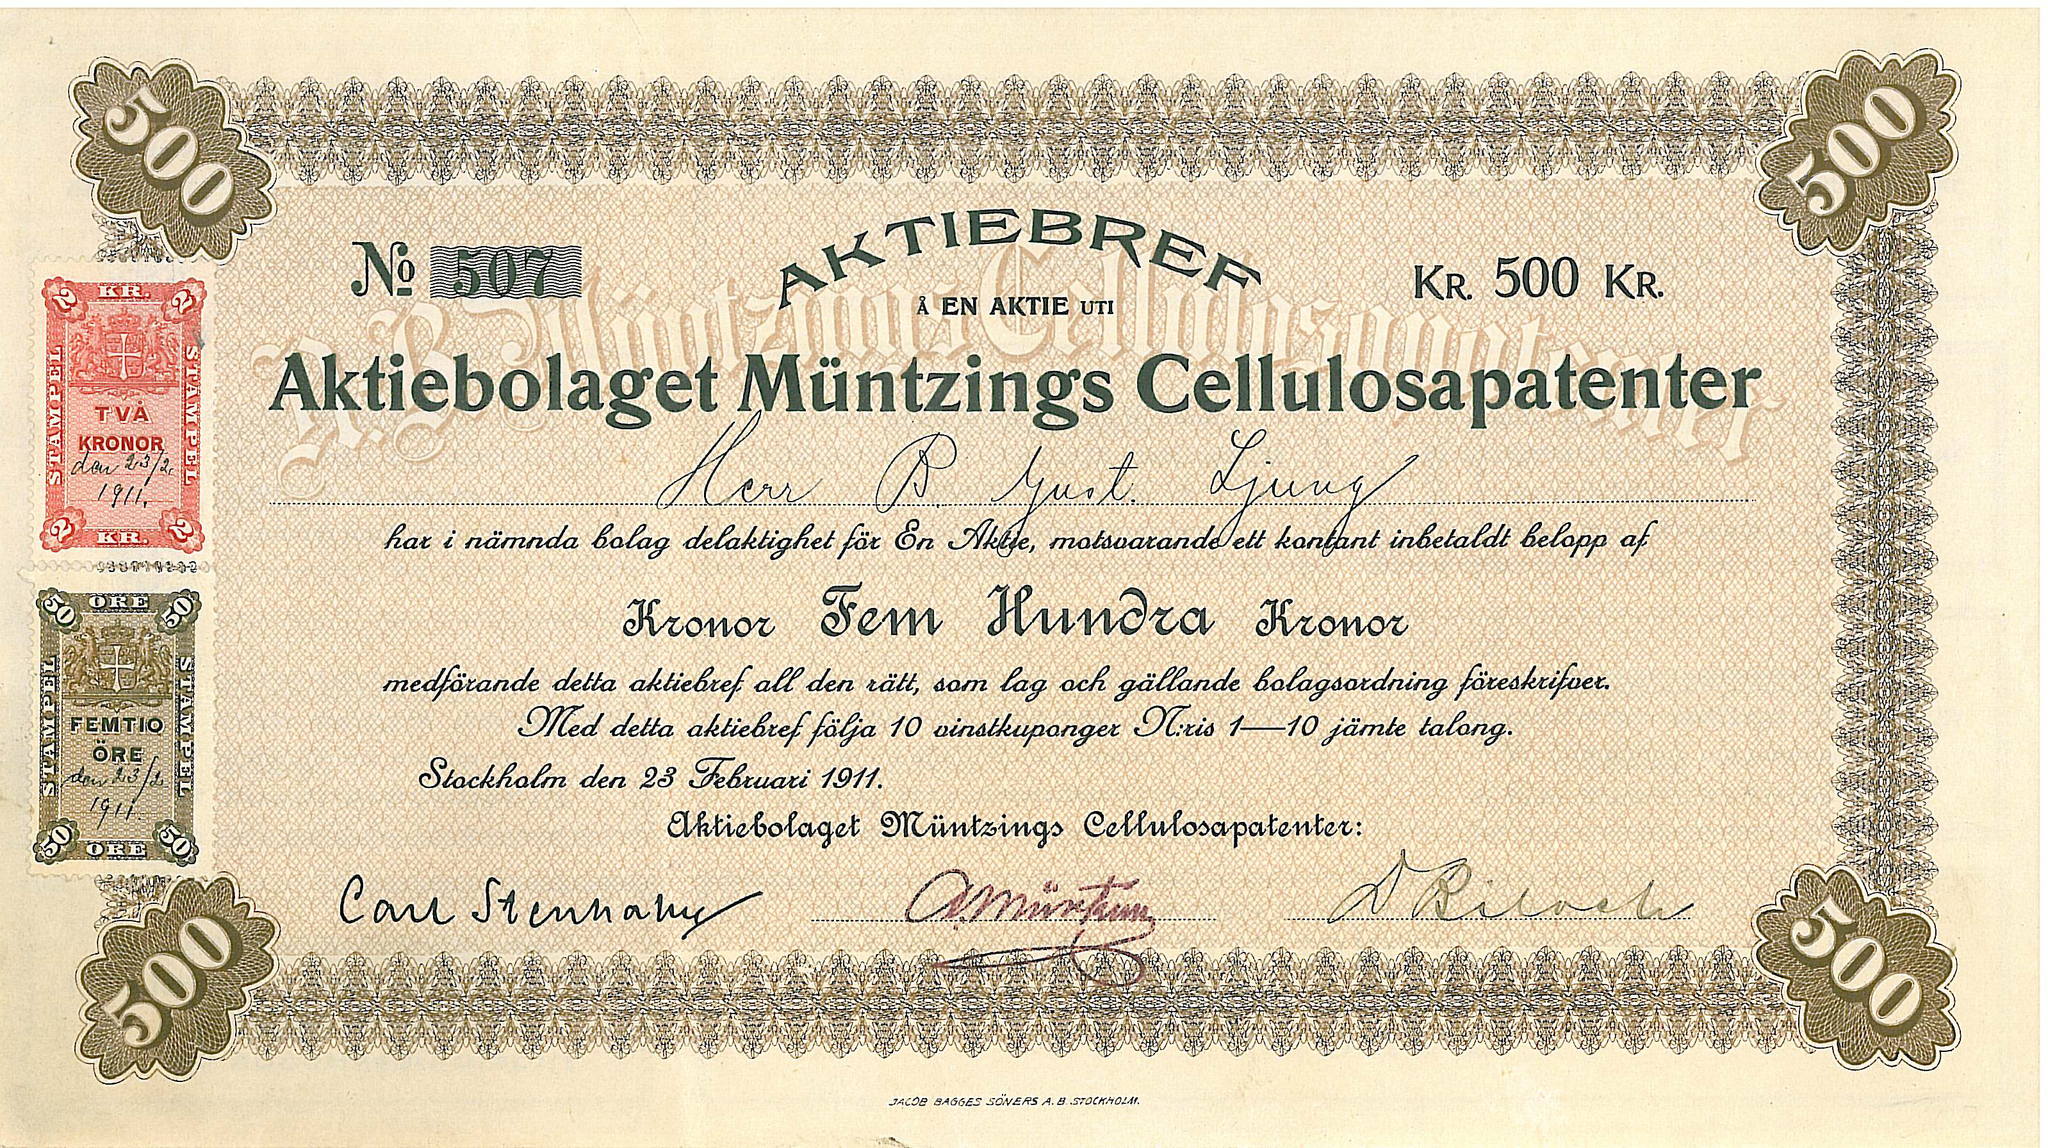 Müntzings Cellulosapatenter, AB